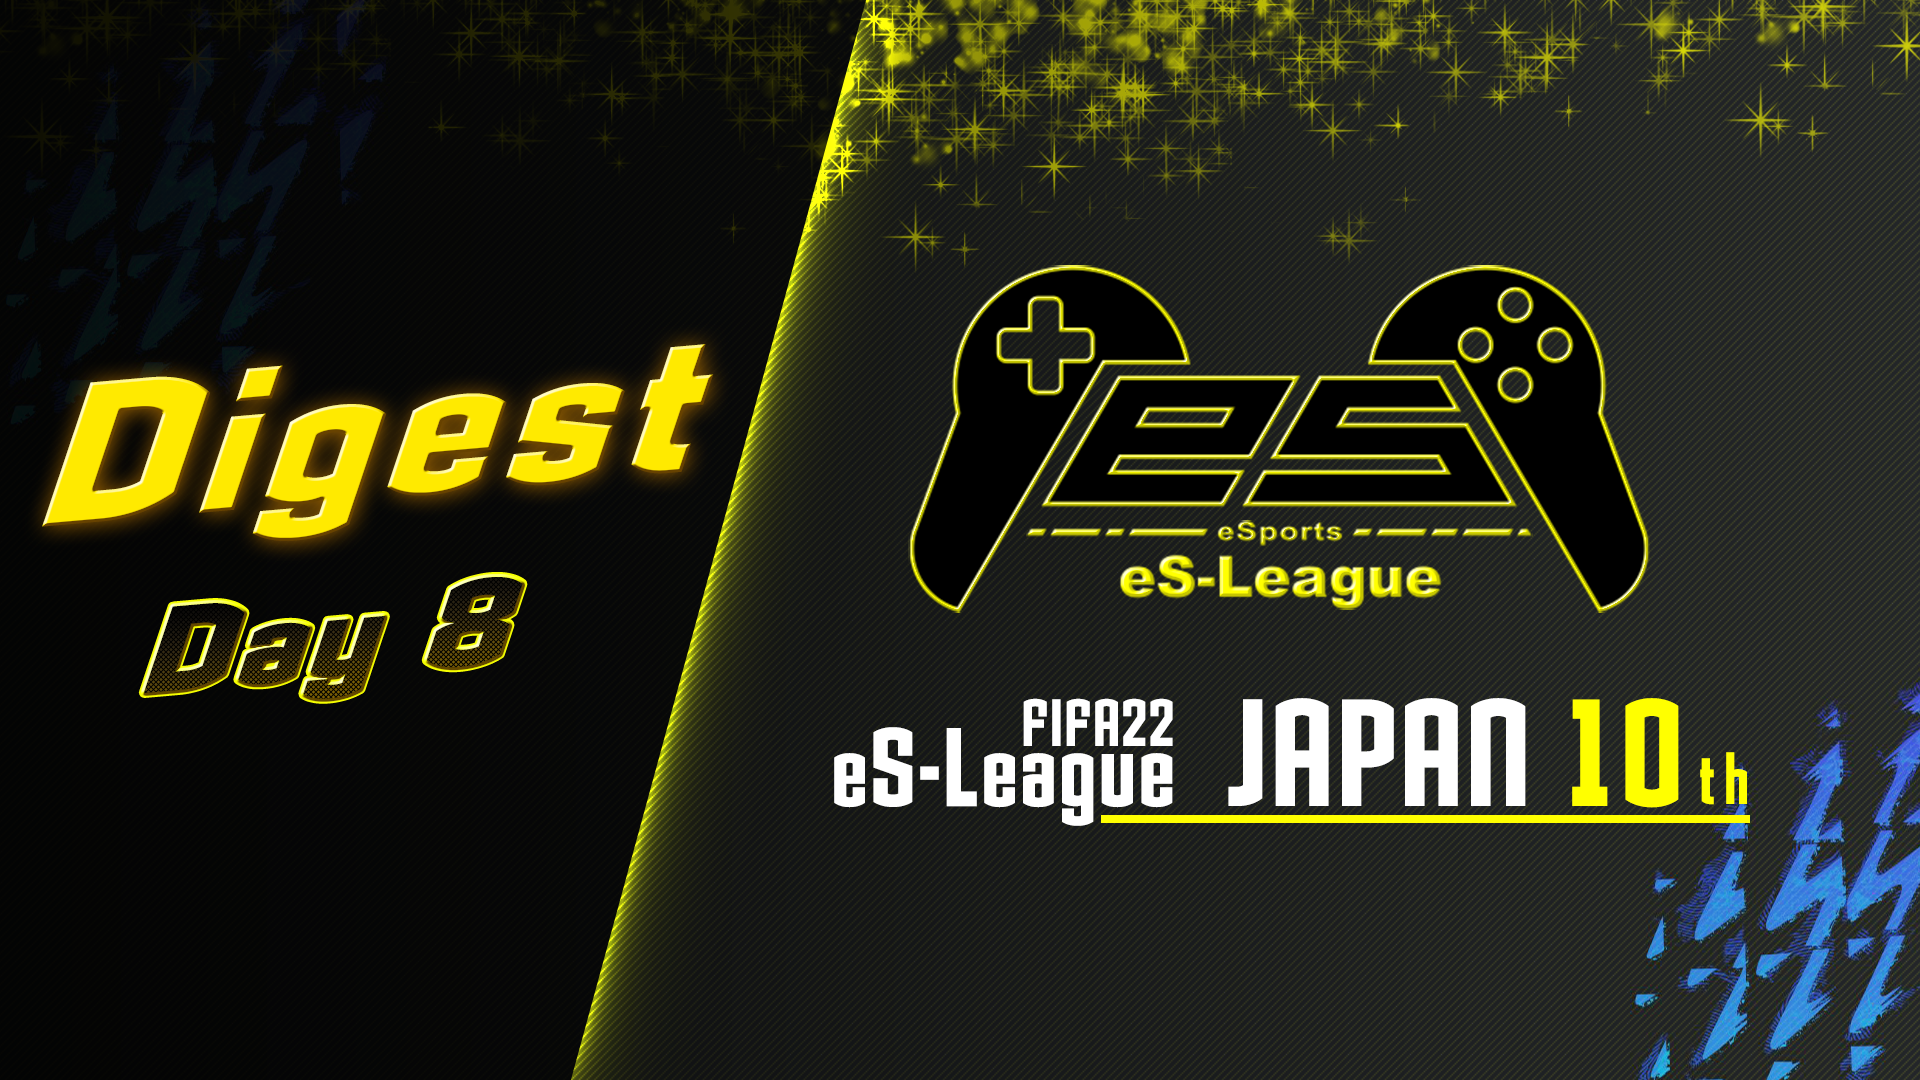 FIFA22 eS-League JAPAN 10th DAY8 ダイジェスト